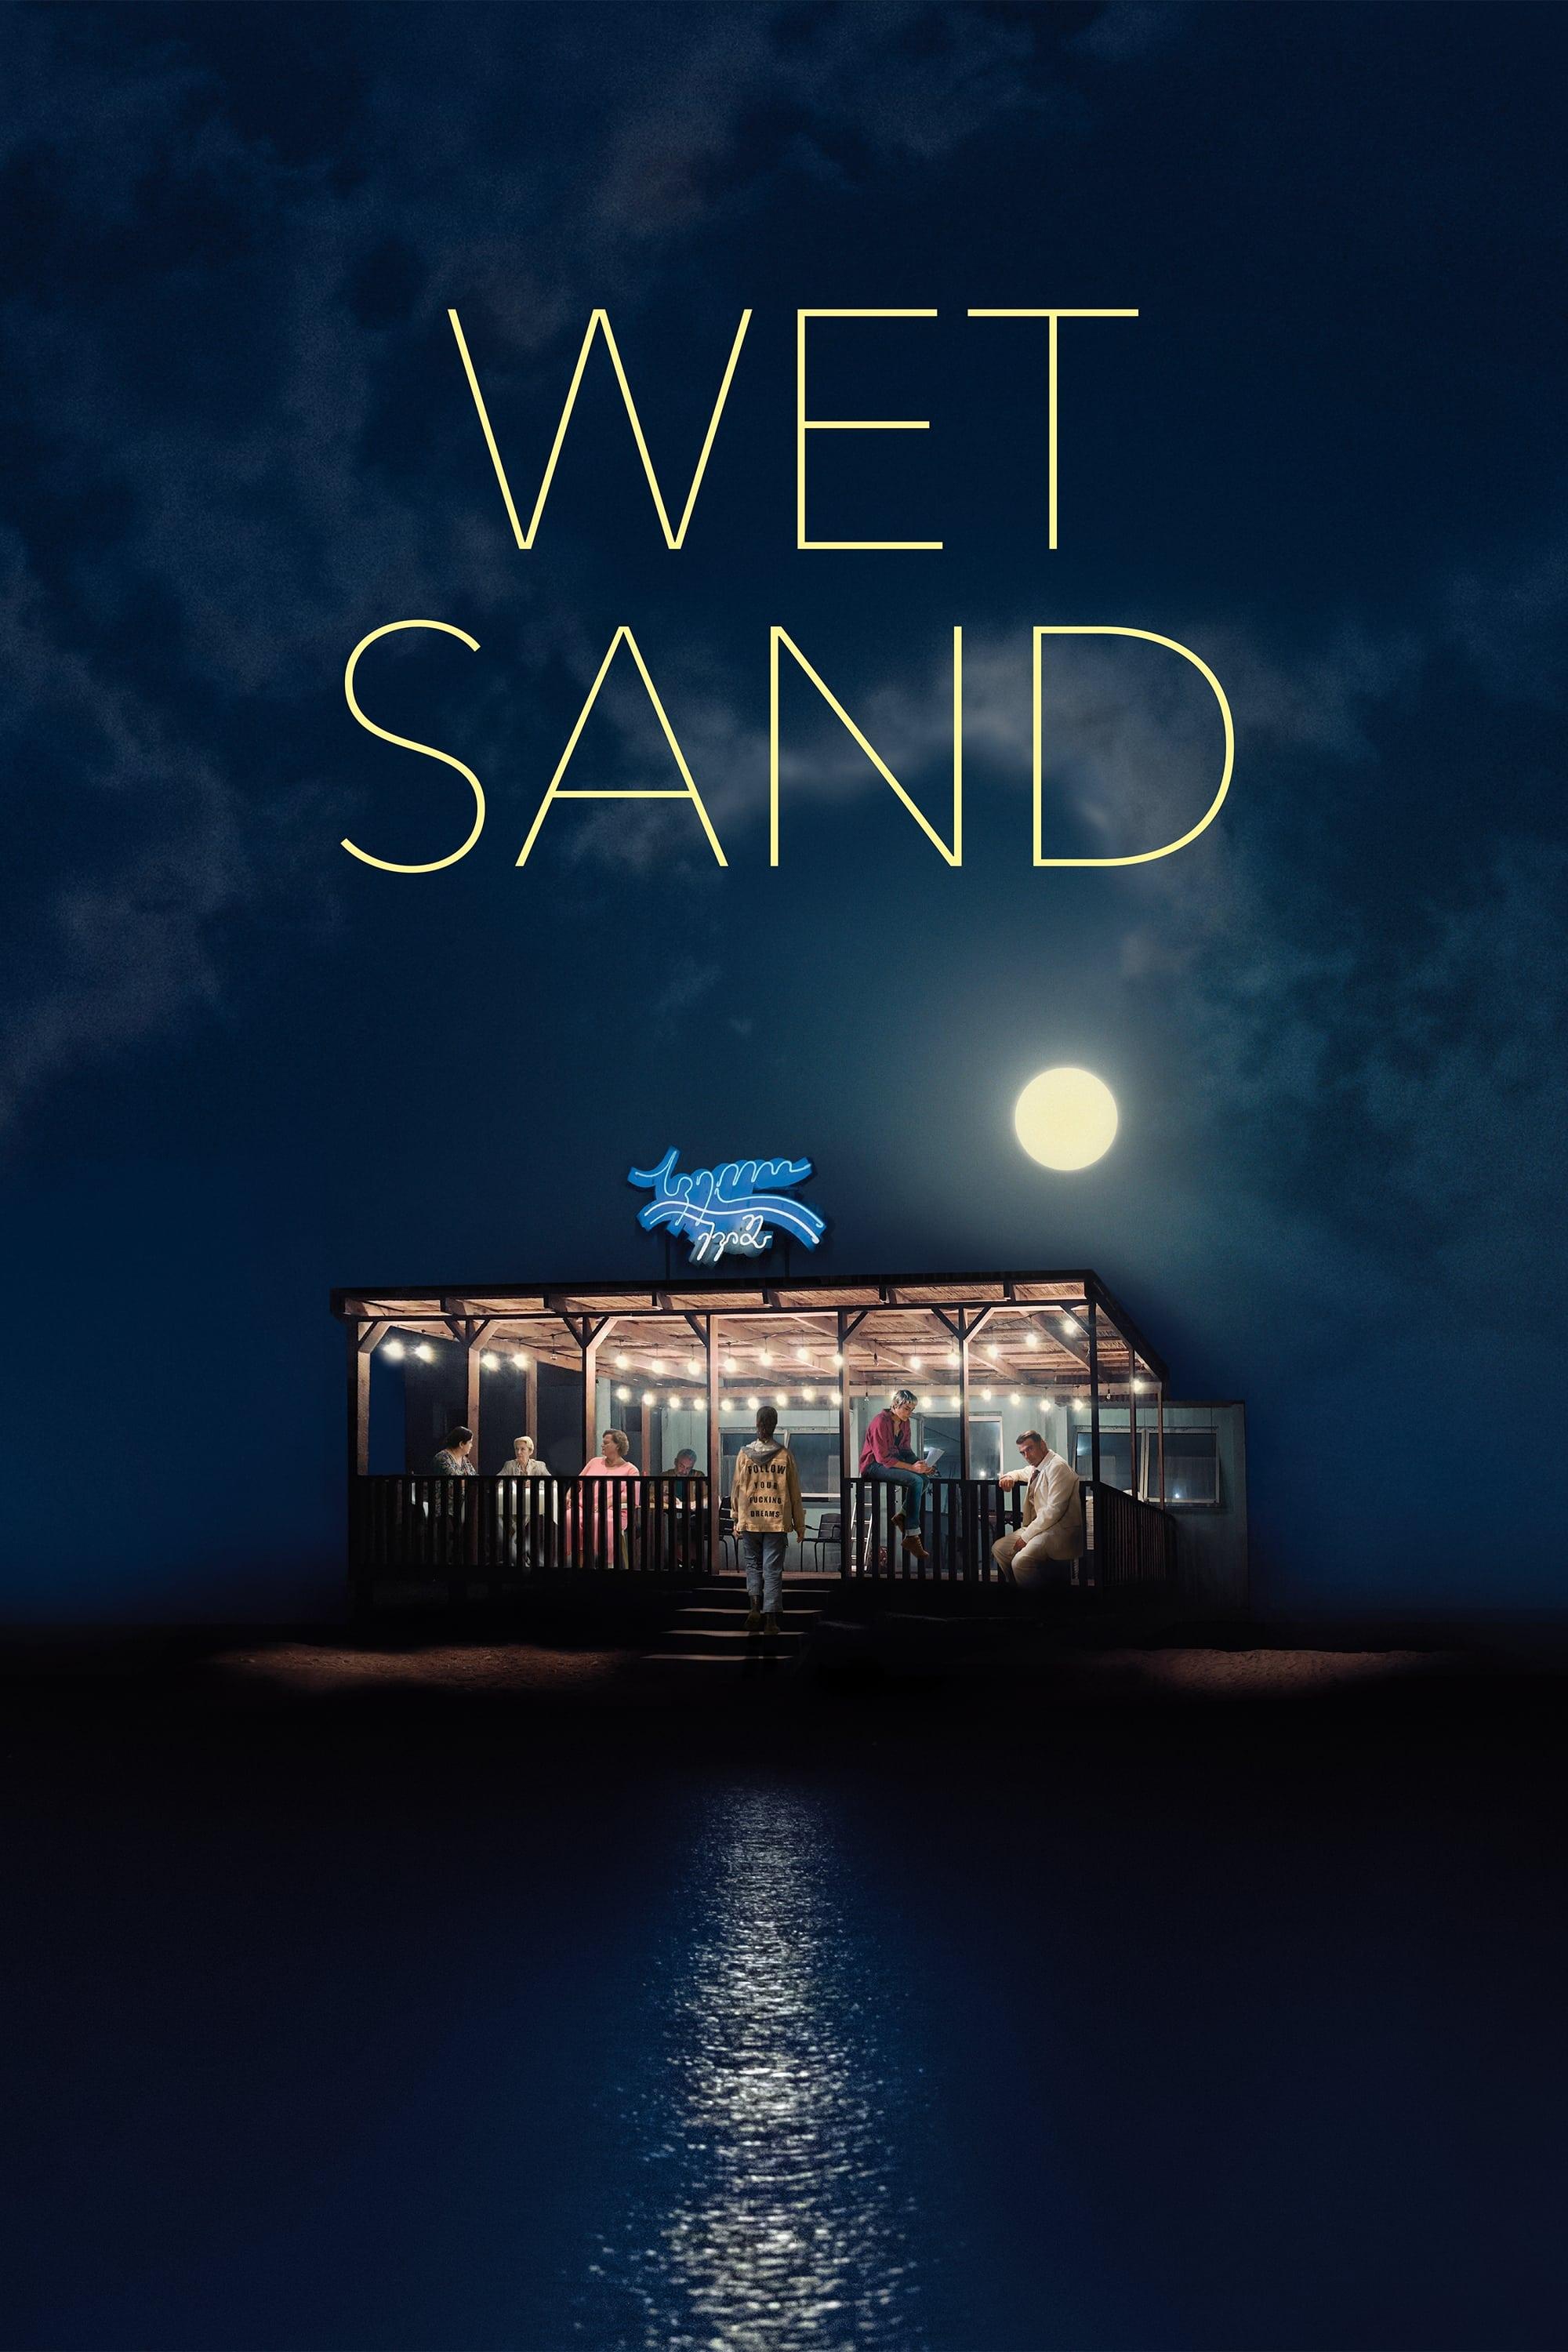 Wet Sand poster